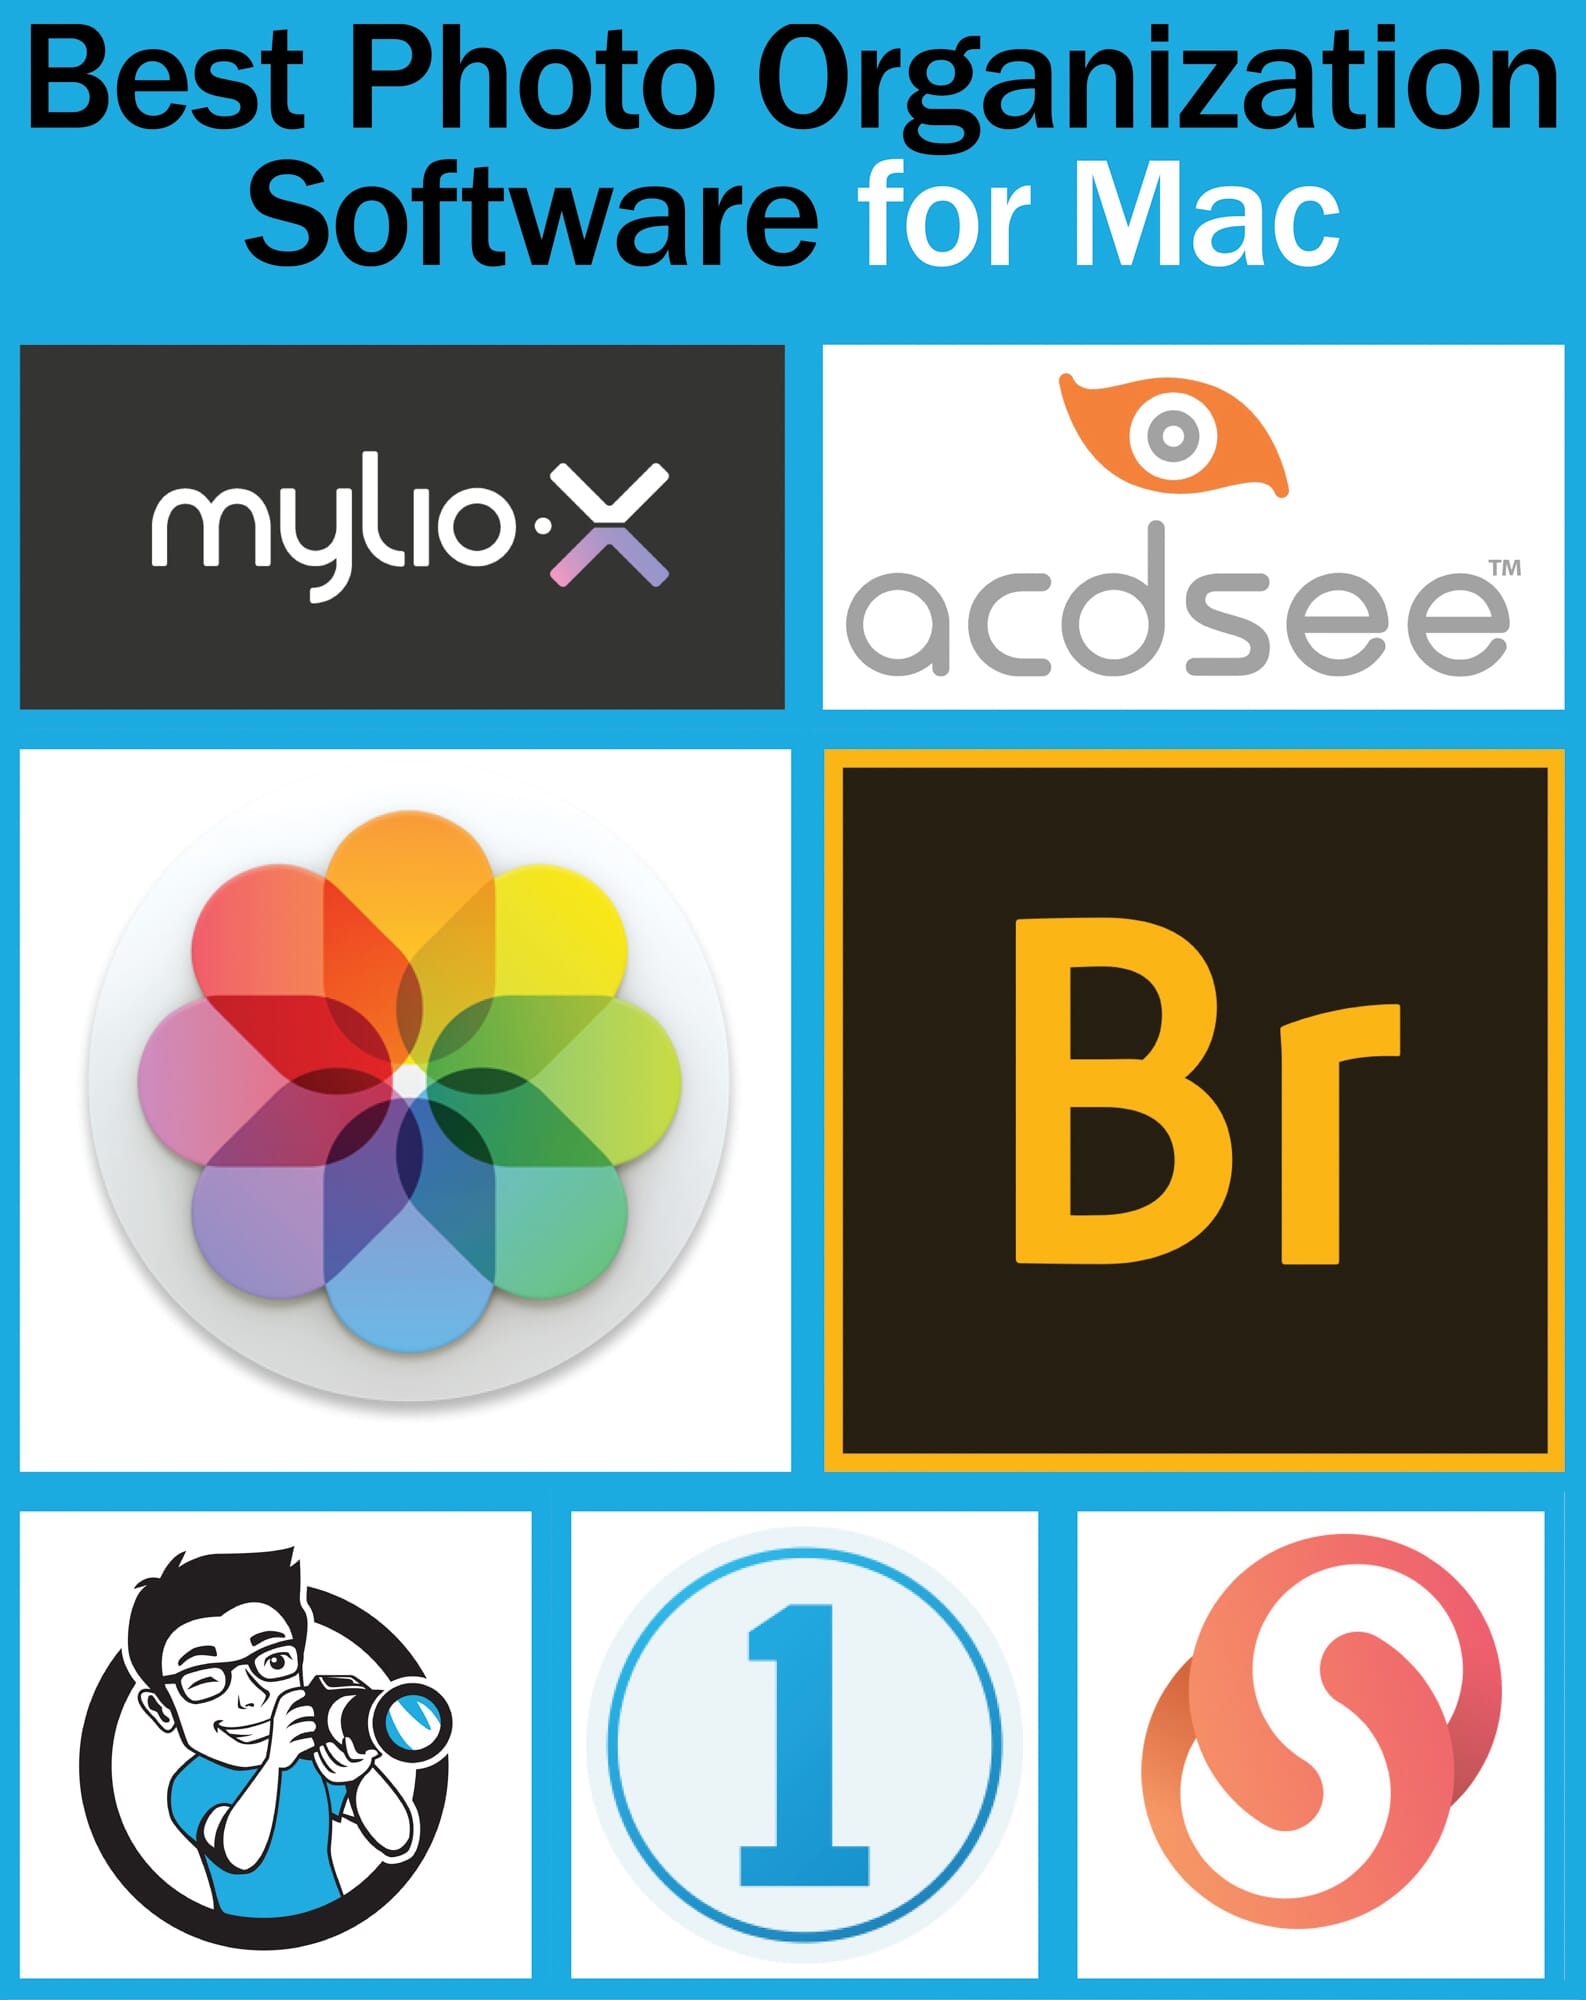 photo finishing software comparison for mac